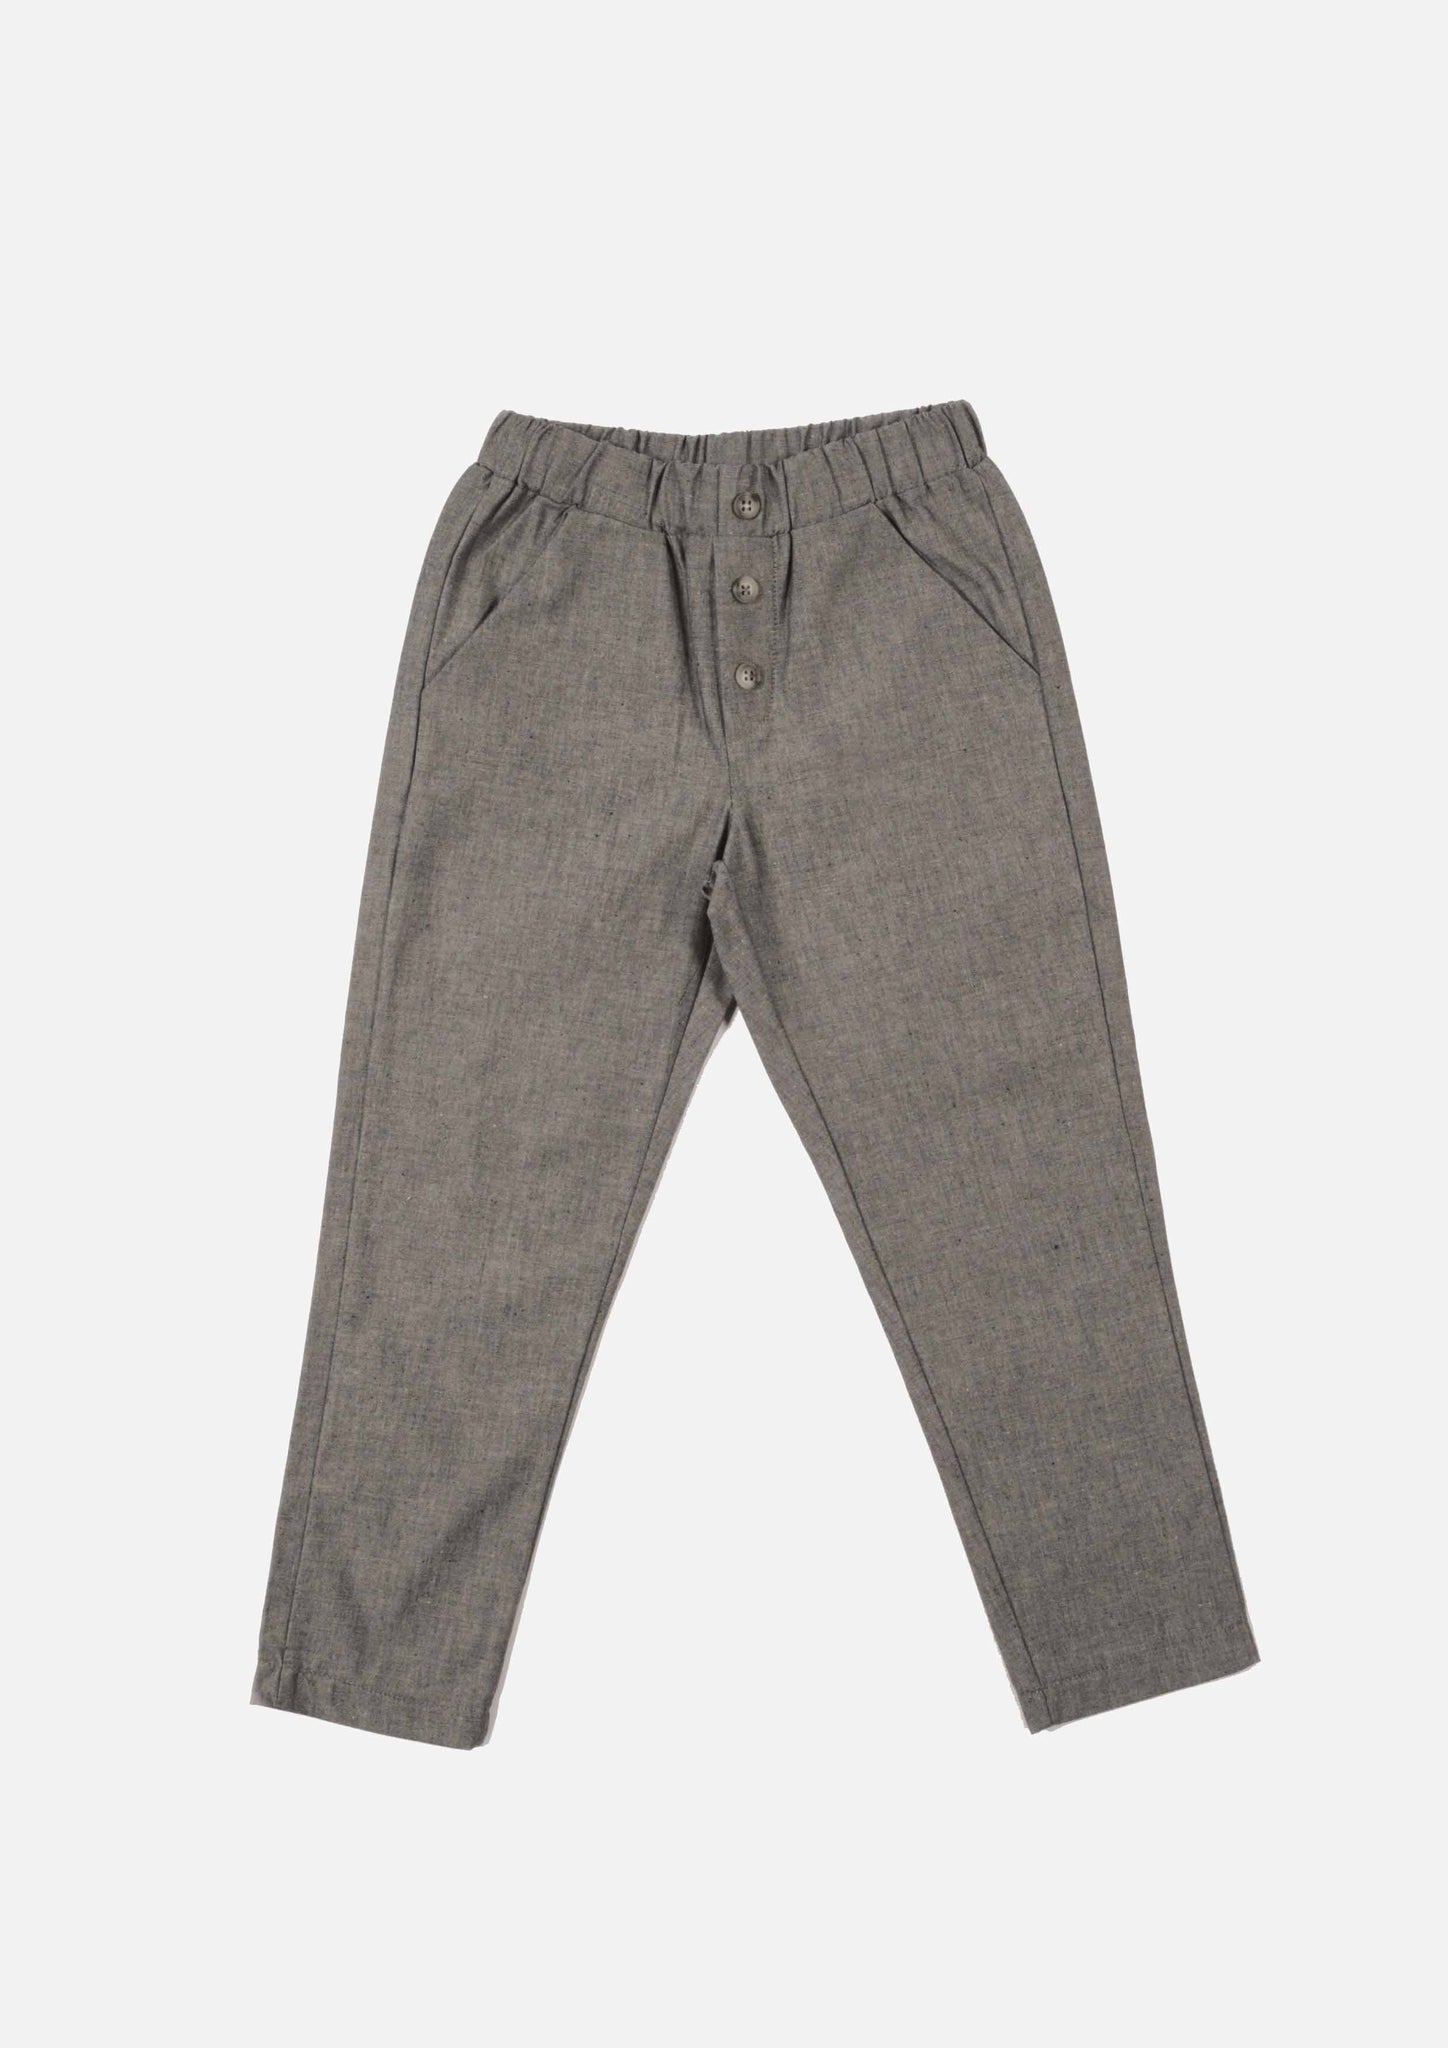 Pantalone GAVI Chambray antracite-OUTLET Pantaloni e Shorts-I Leoncini Shop